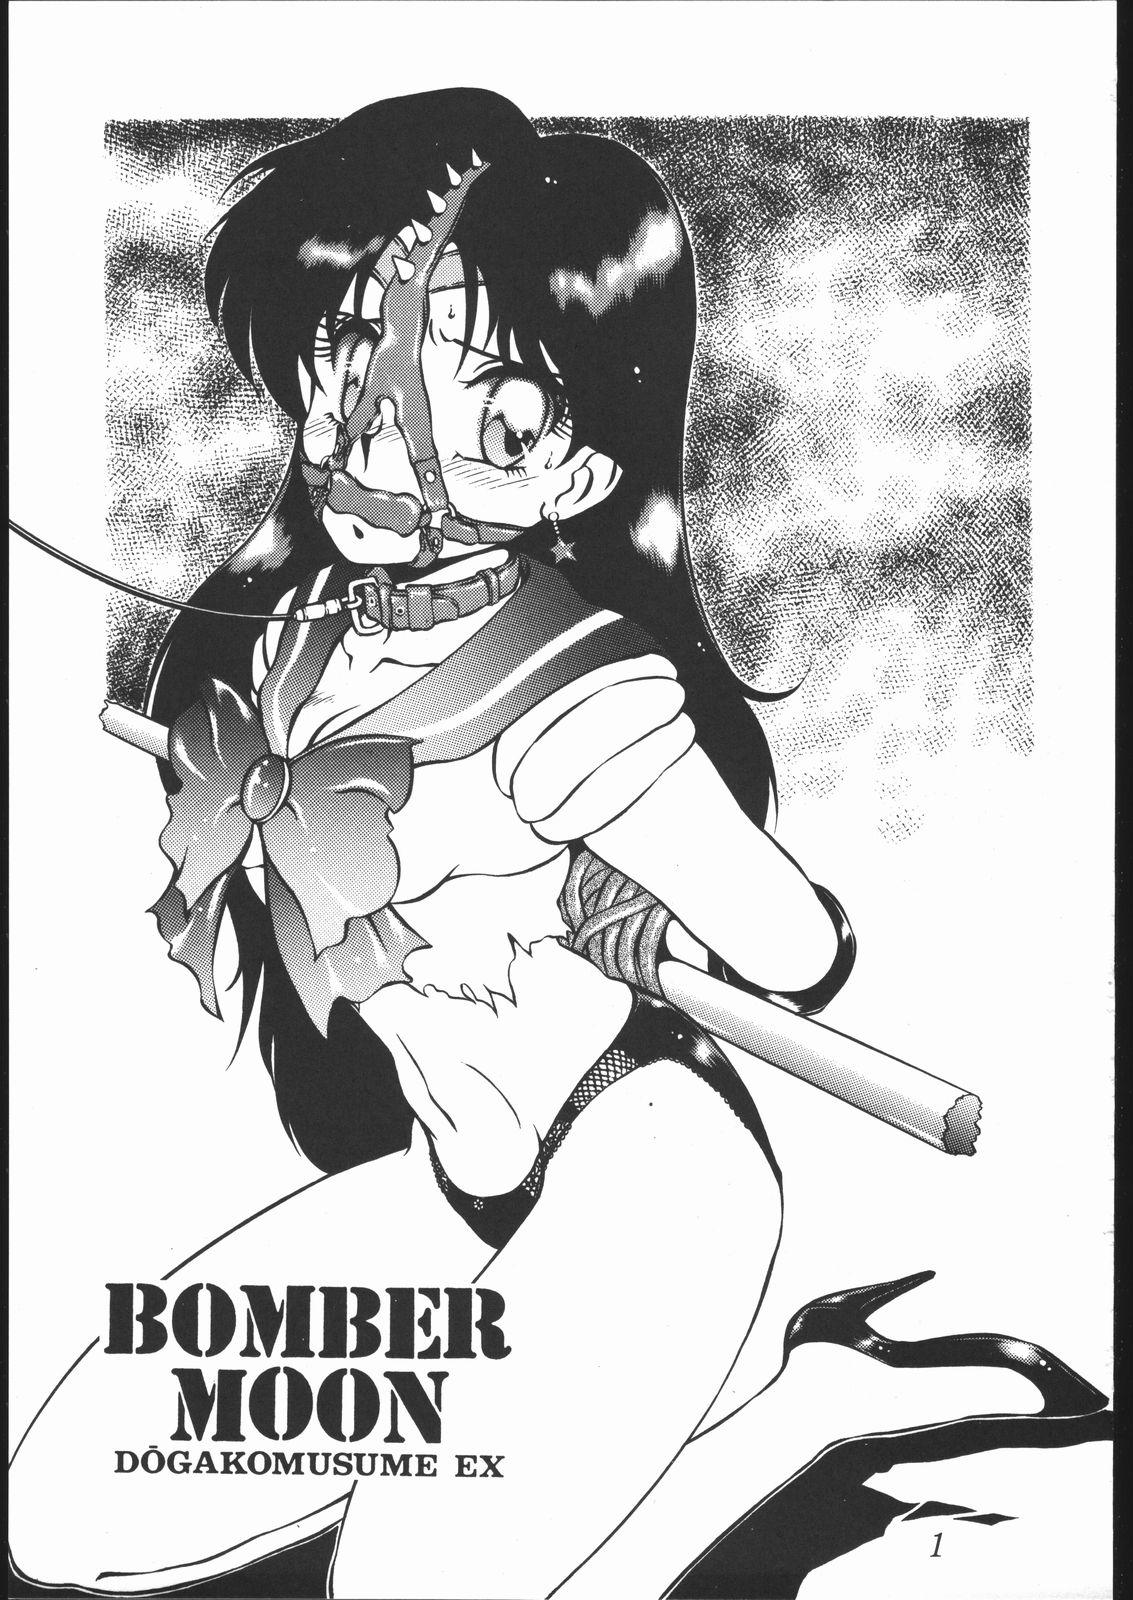 Baile DOGAKOMUSUME EX BOMBER MOON - Sailor moon Vadia - Page 2